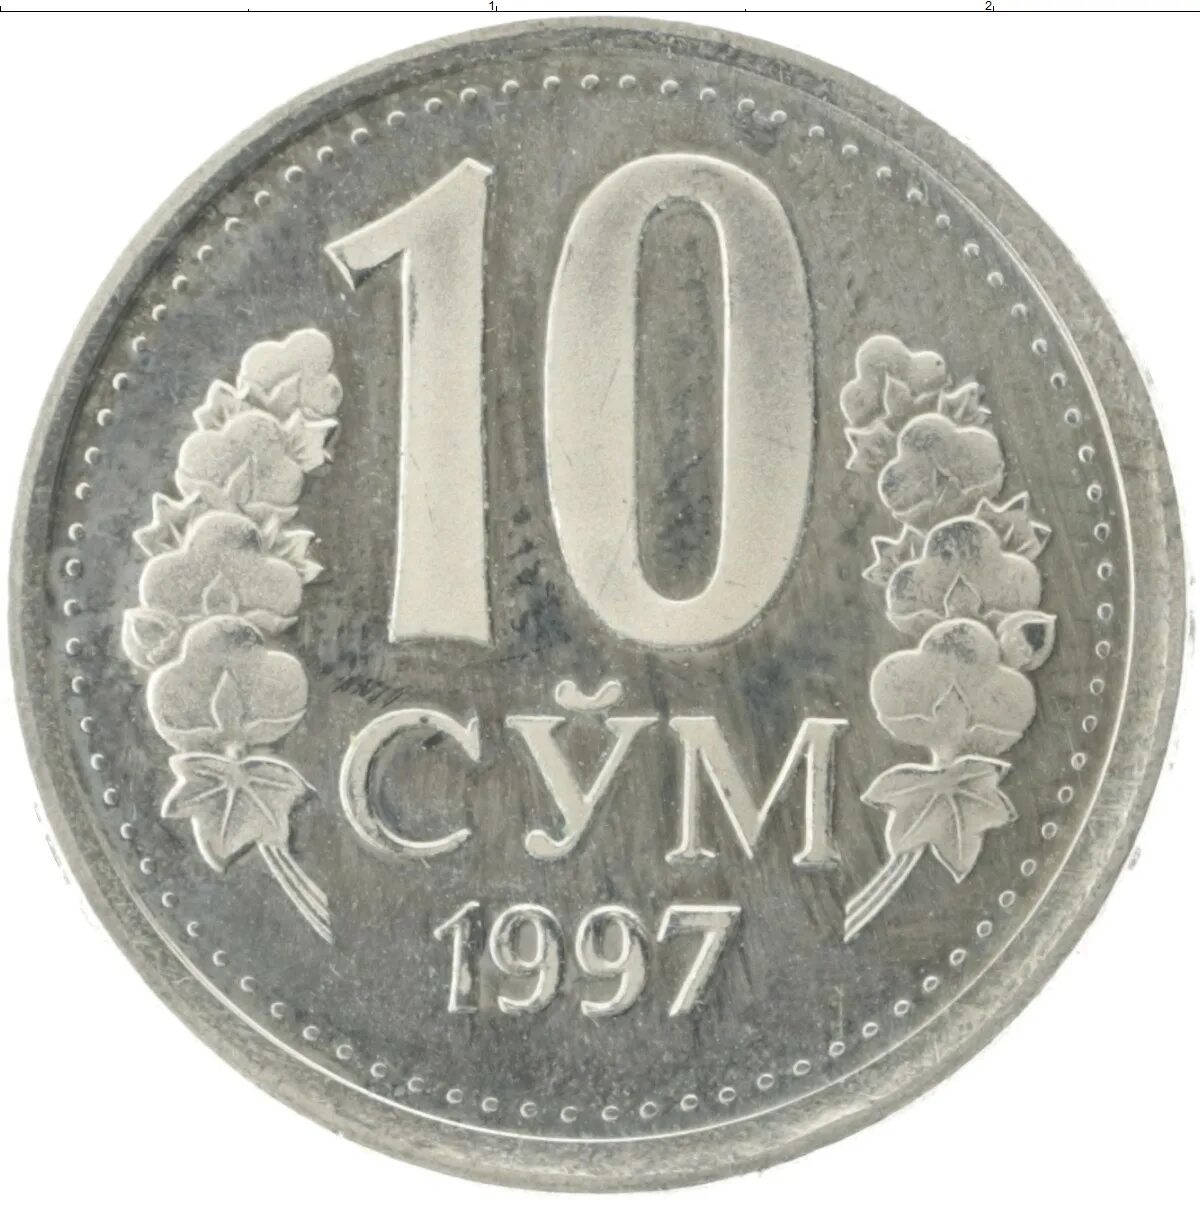 Монета 1994 года. Узбекистан 20 тийин 1994 год. Монета 20 тийин 1994. Монеты 1 тийин 1994. Монета Узбекистана 10 сом 1994.